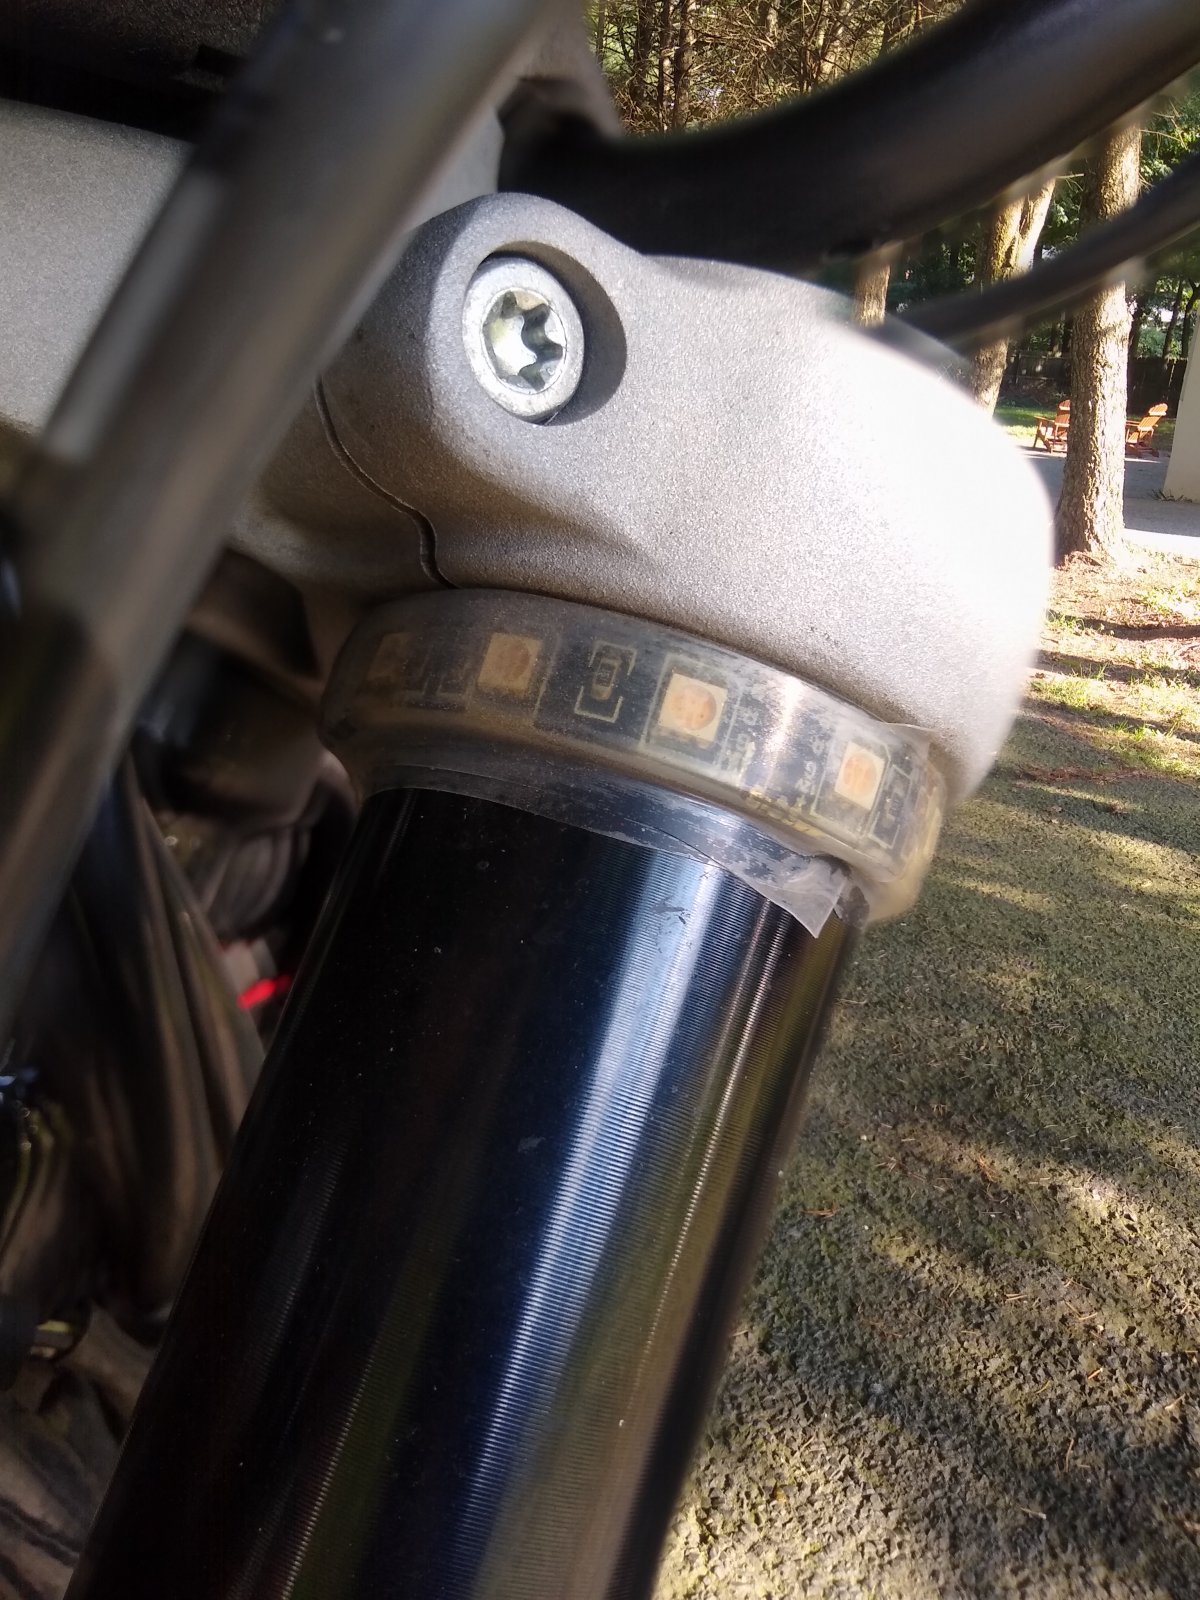 Riding old bikes without indicators (my Norton)